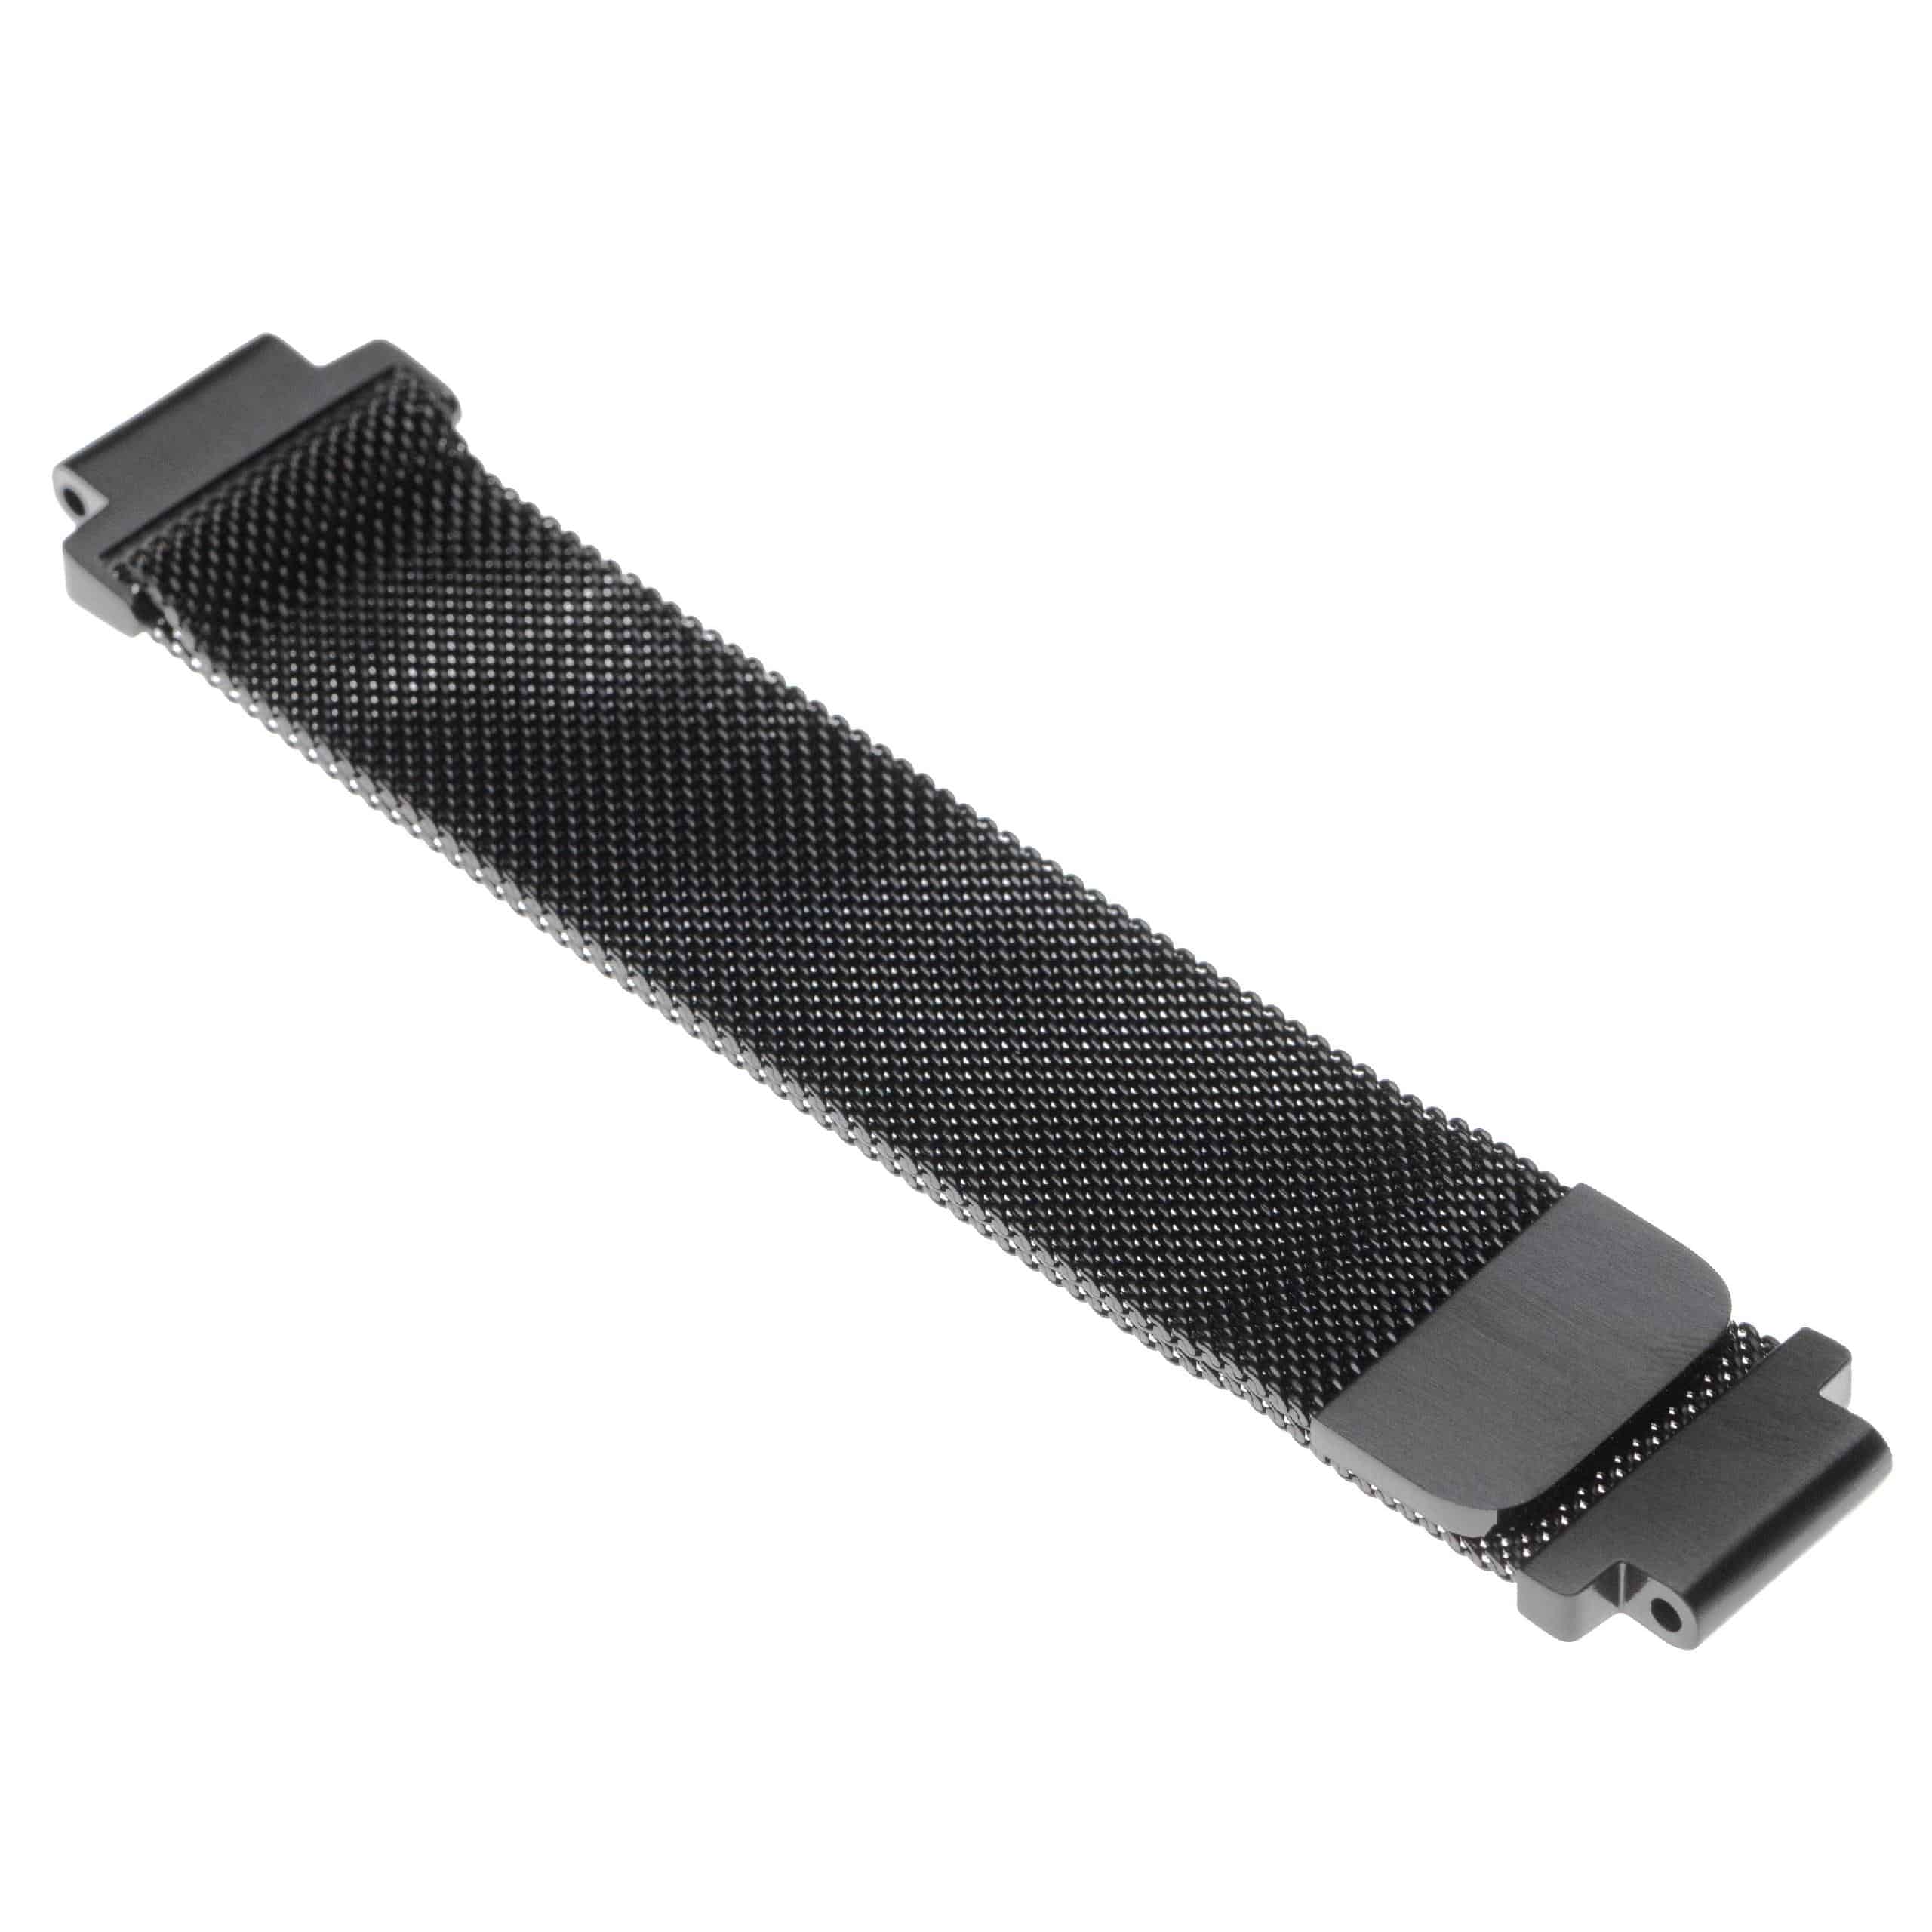 Armband für Garmin Forerunner / Approach Smartwatch - Bis 224 mm Gelenkumfang, Edelstahl, schwarz